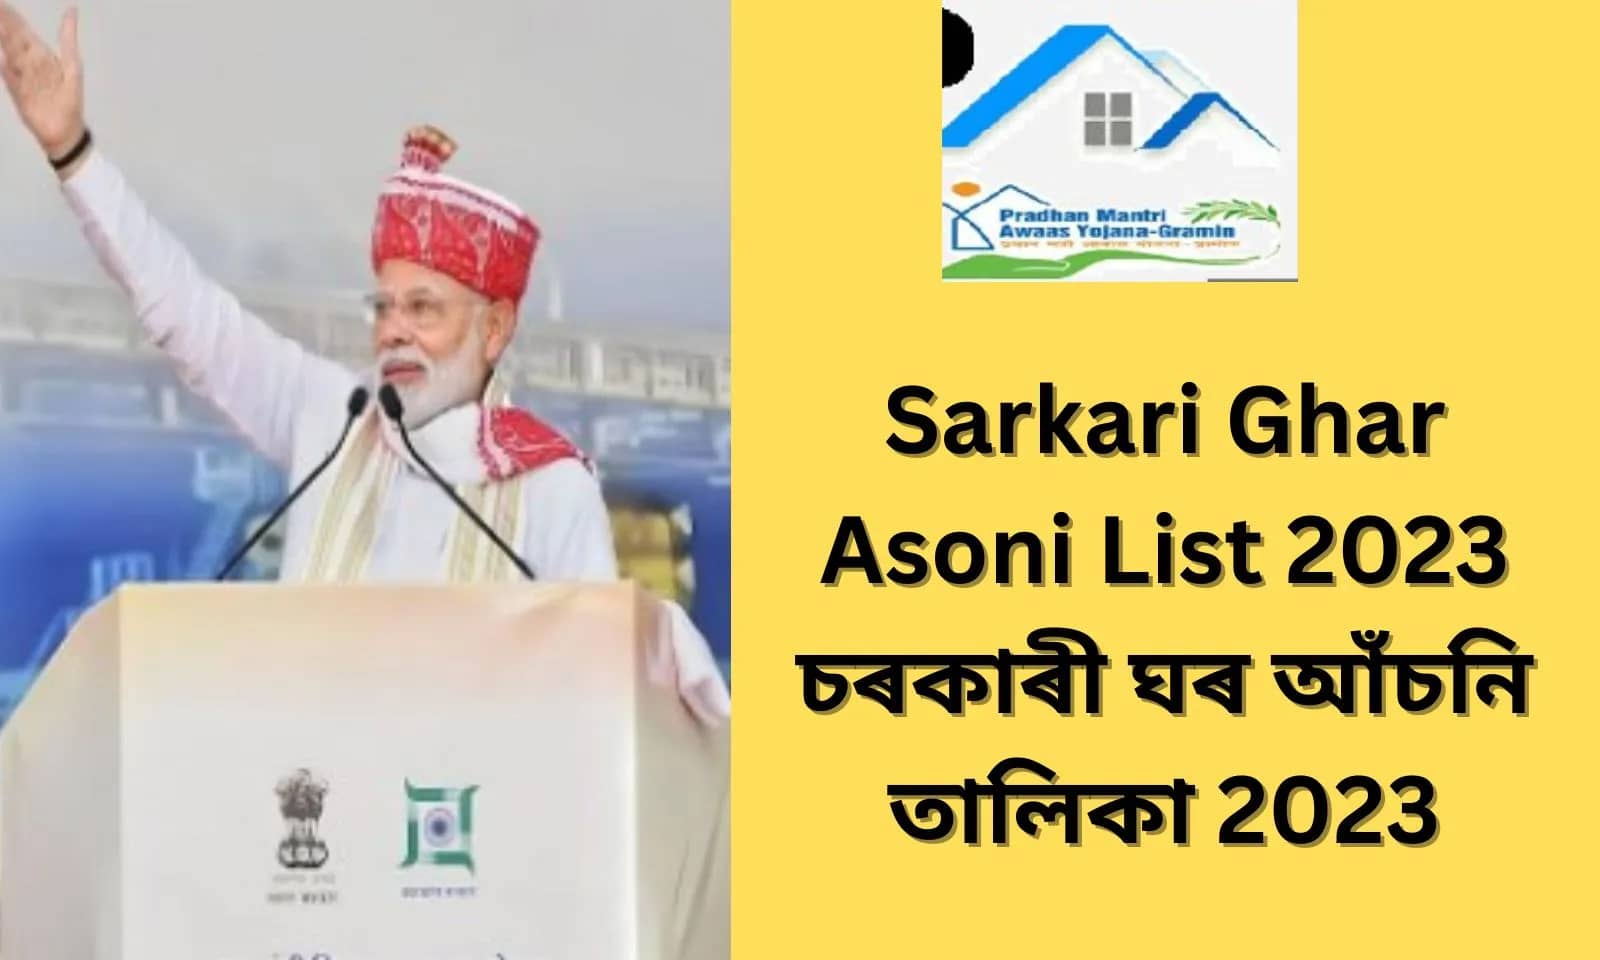 Sarkari Ghar Asoni List 2023